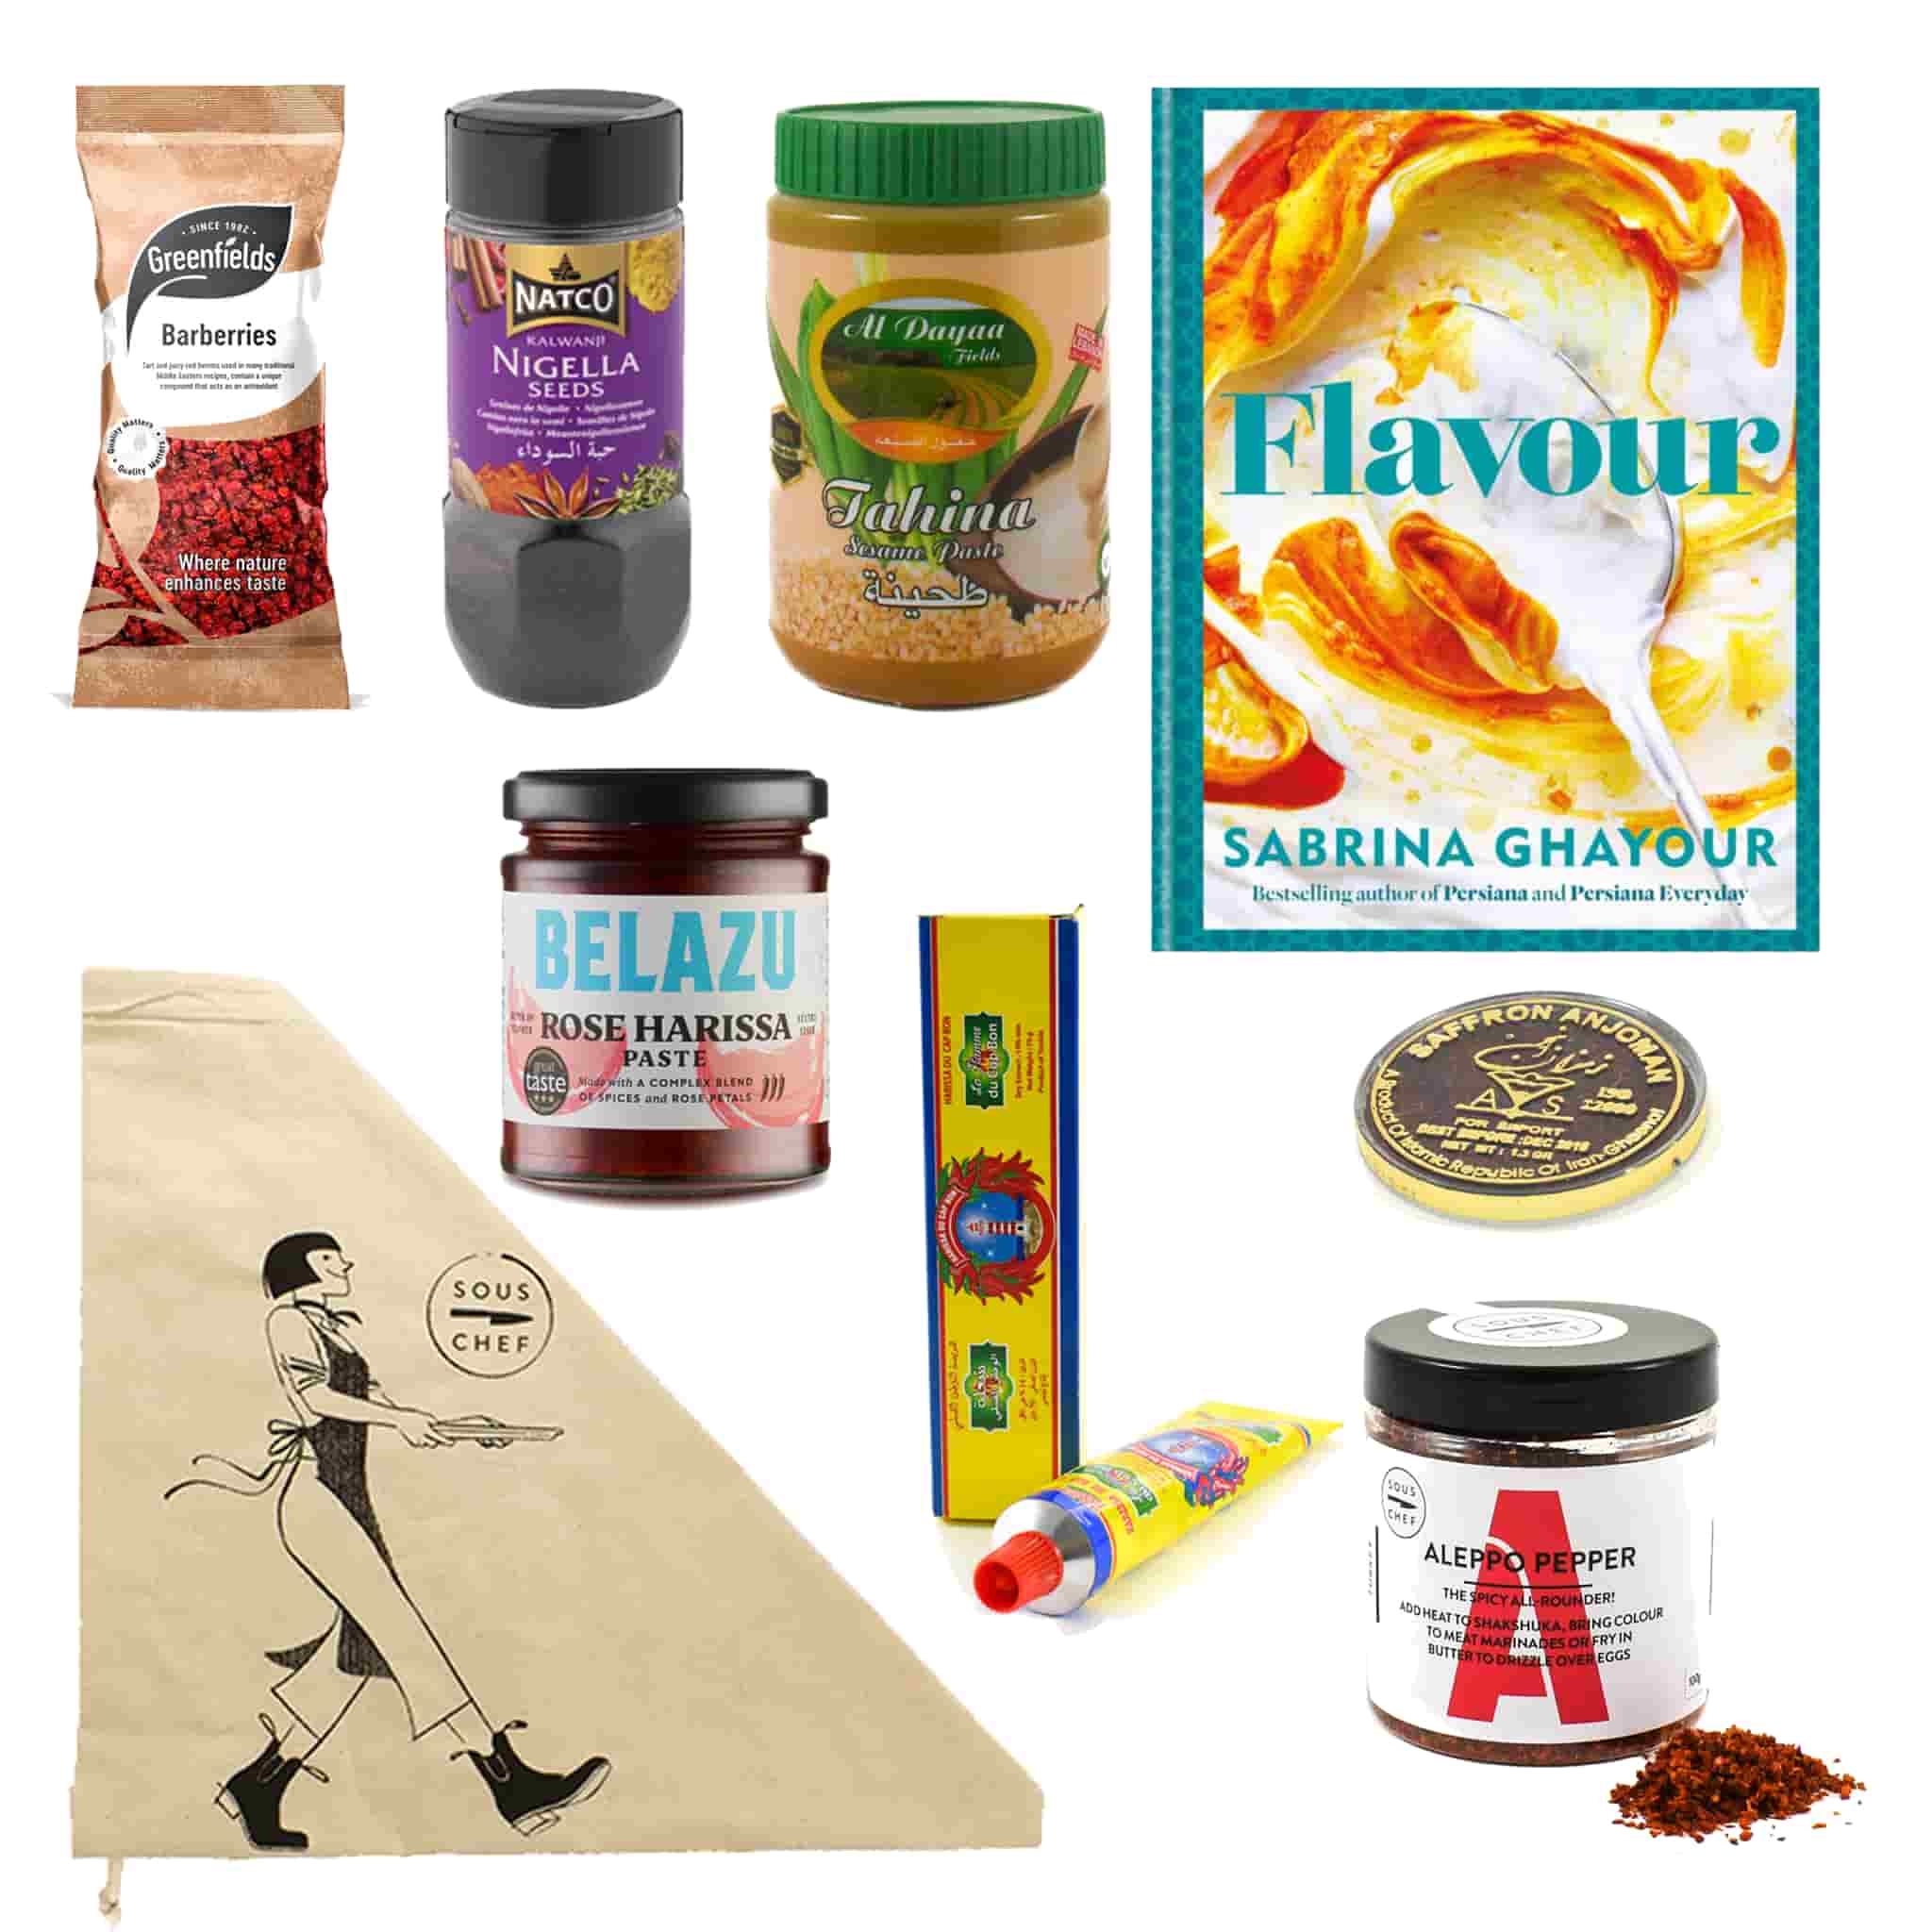 Sabrina Ghayour Flavour Cookbook & Ingredients Set